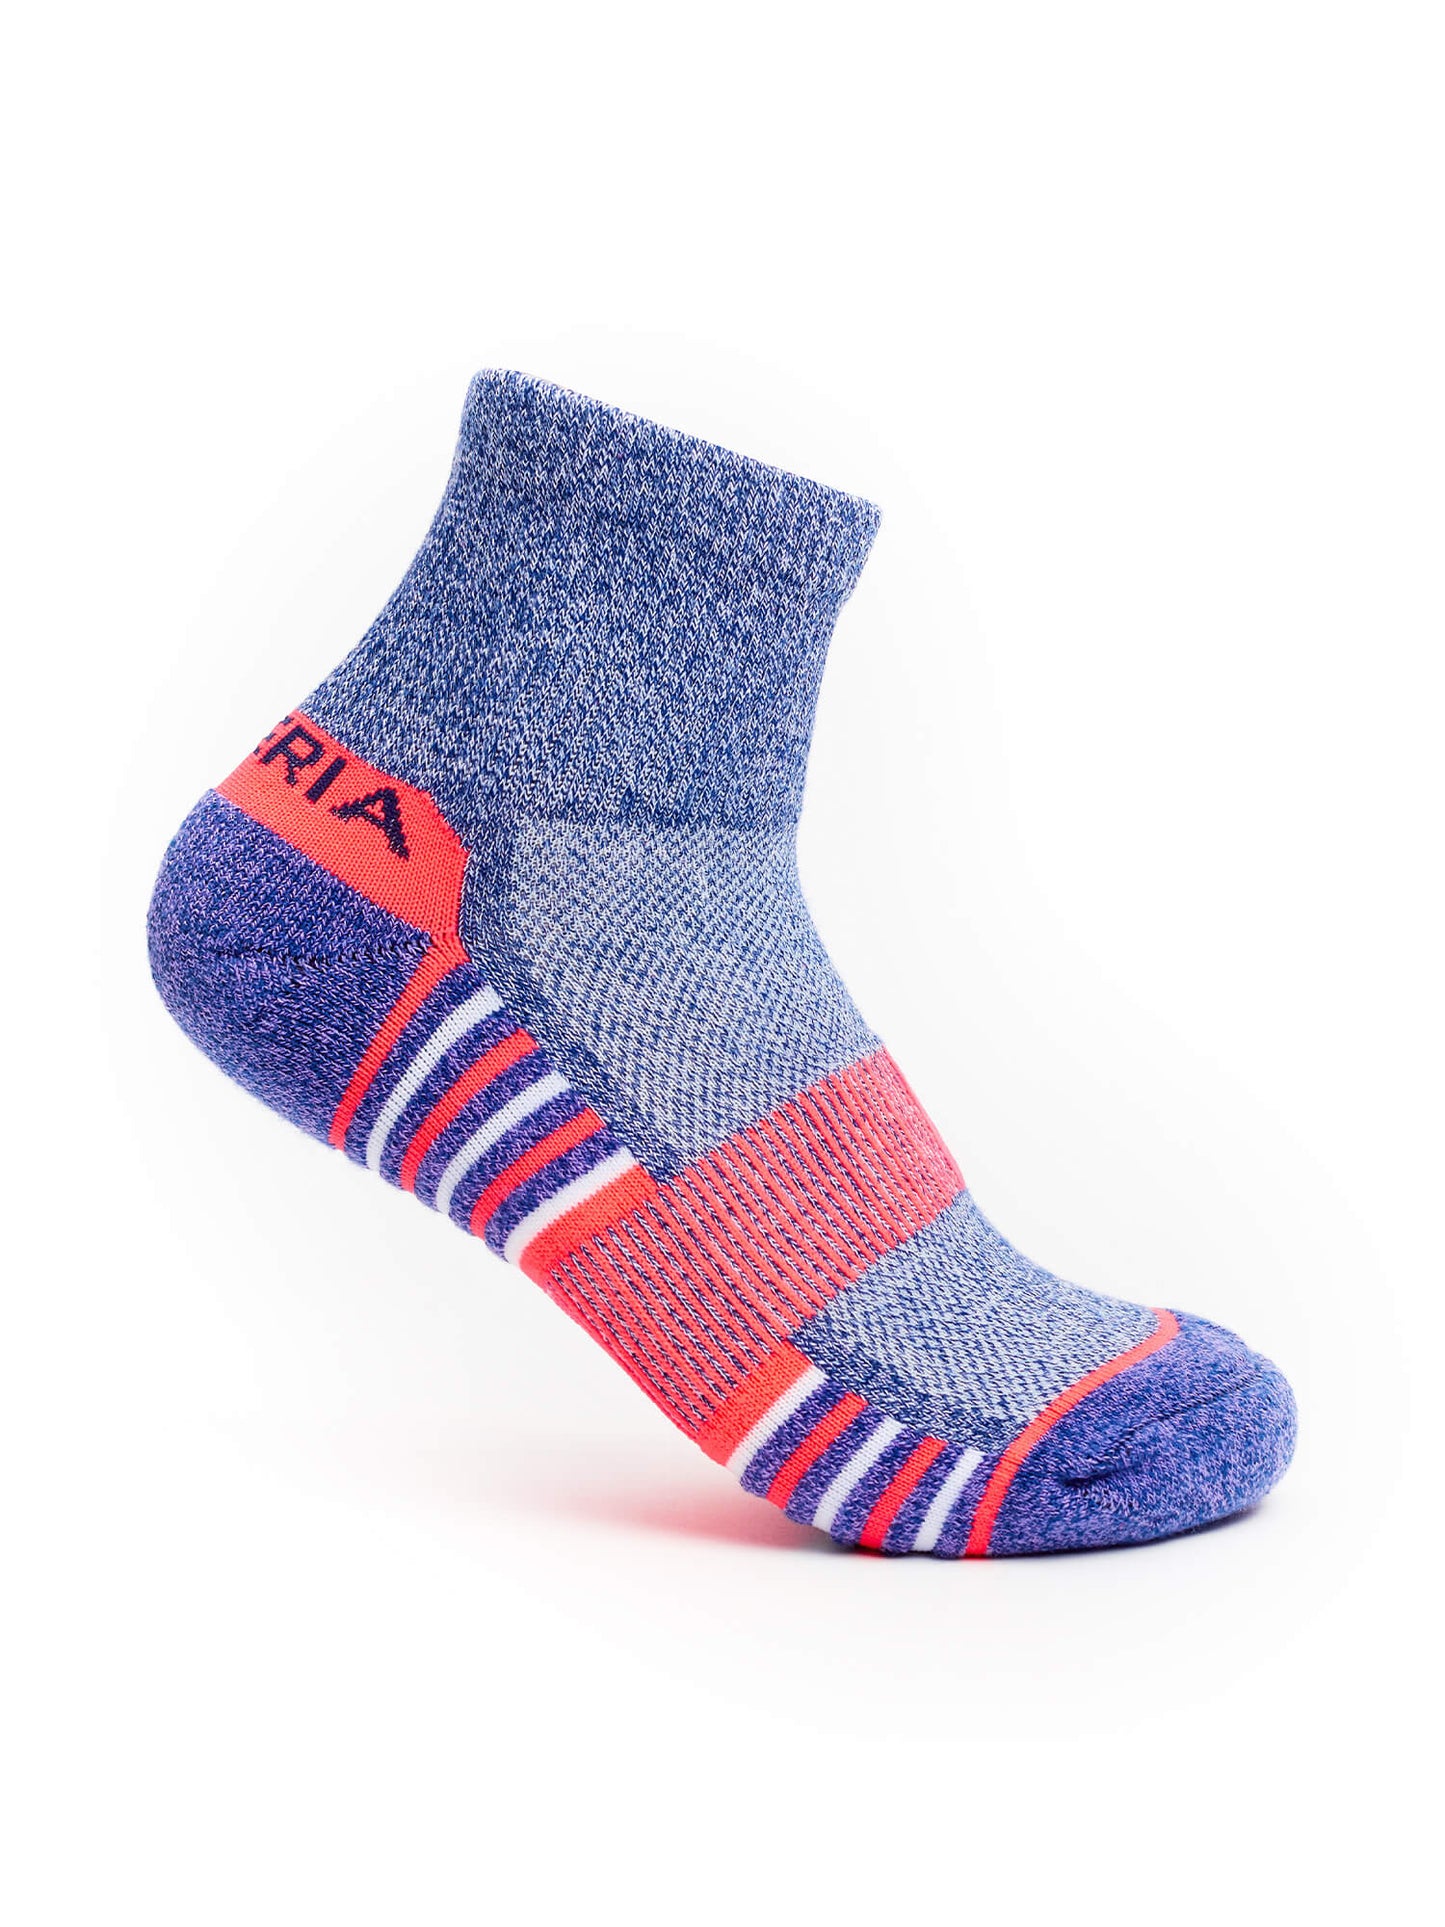 Side of Thorlos Experia Repreve Ankle Socks in Purple